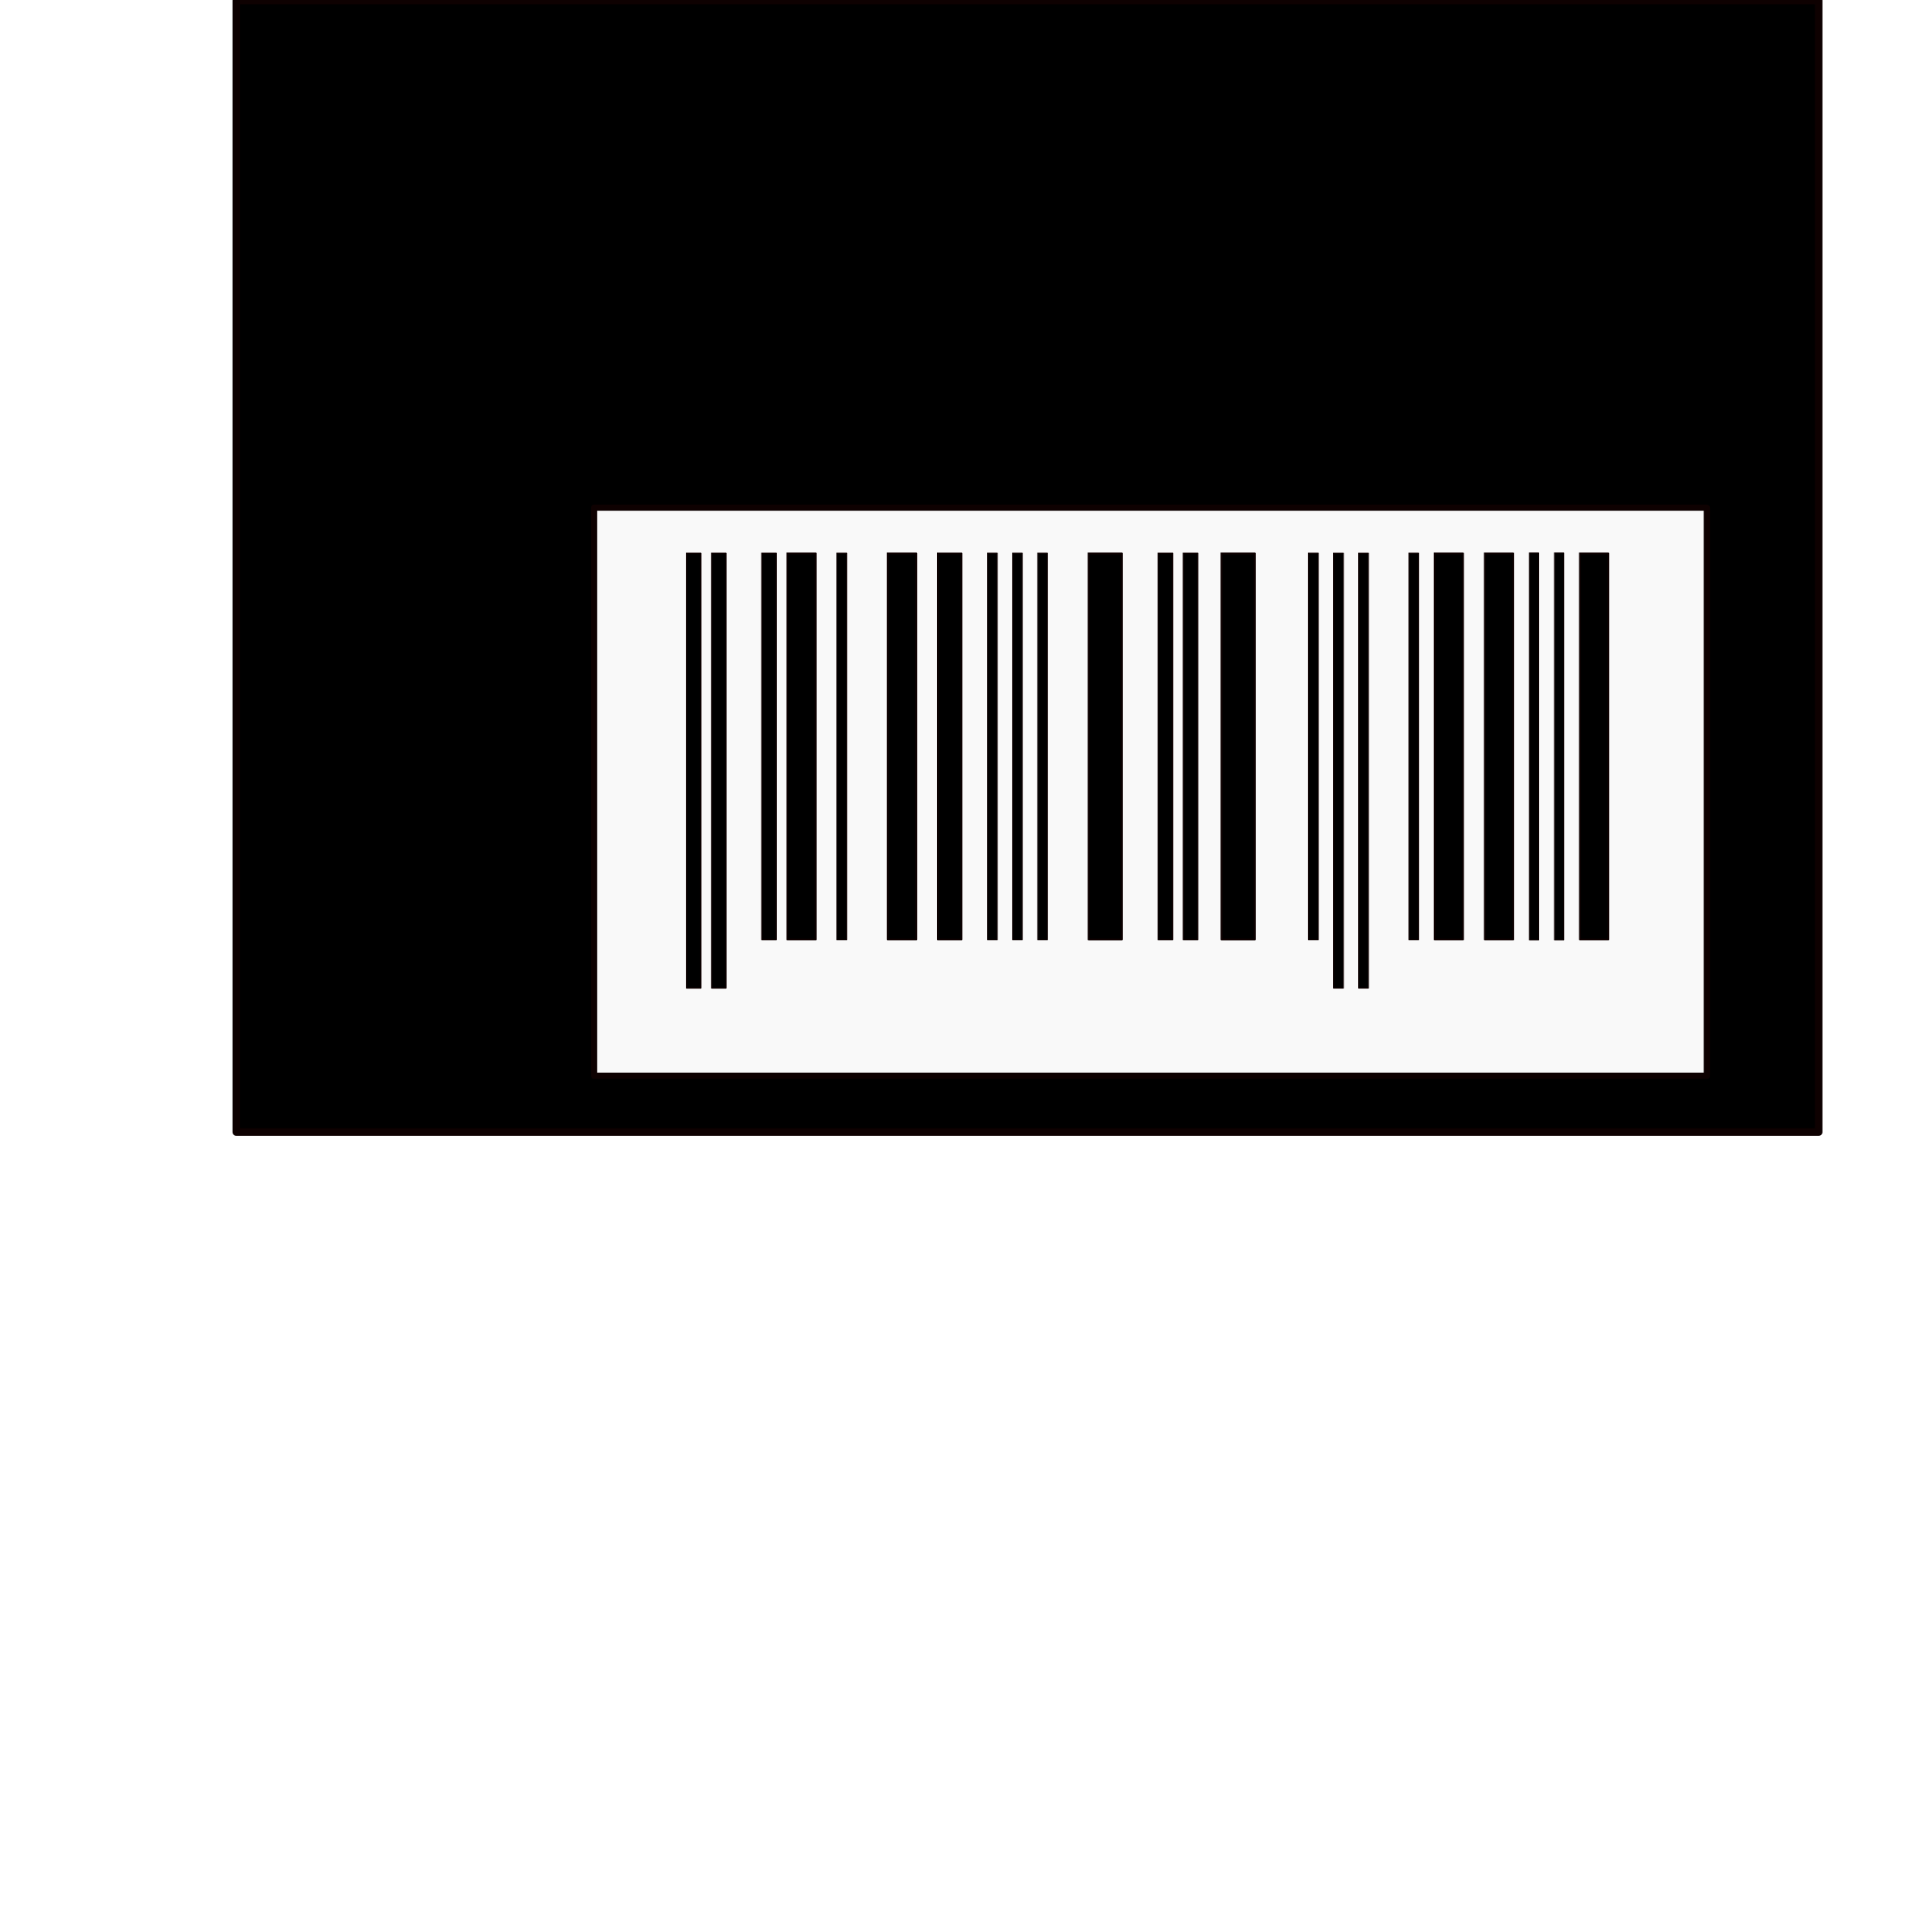 netalloy barcode SVG Clip arts